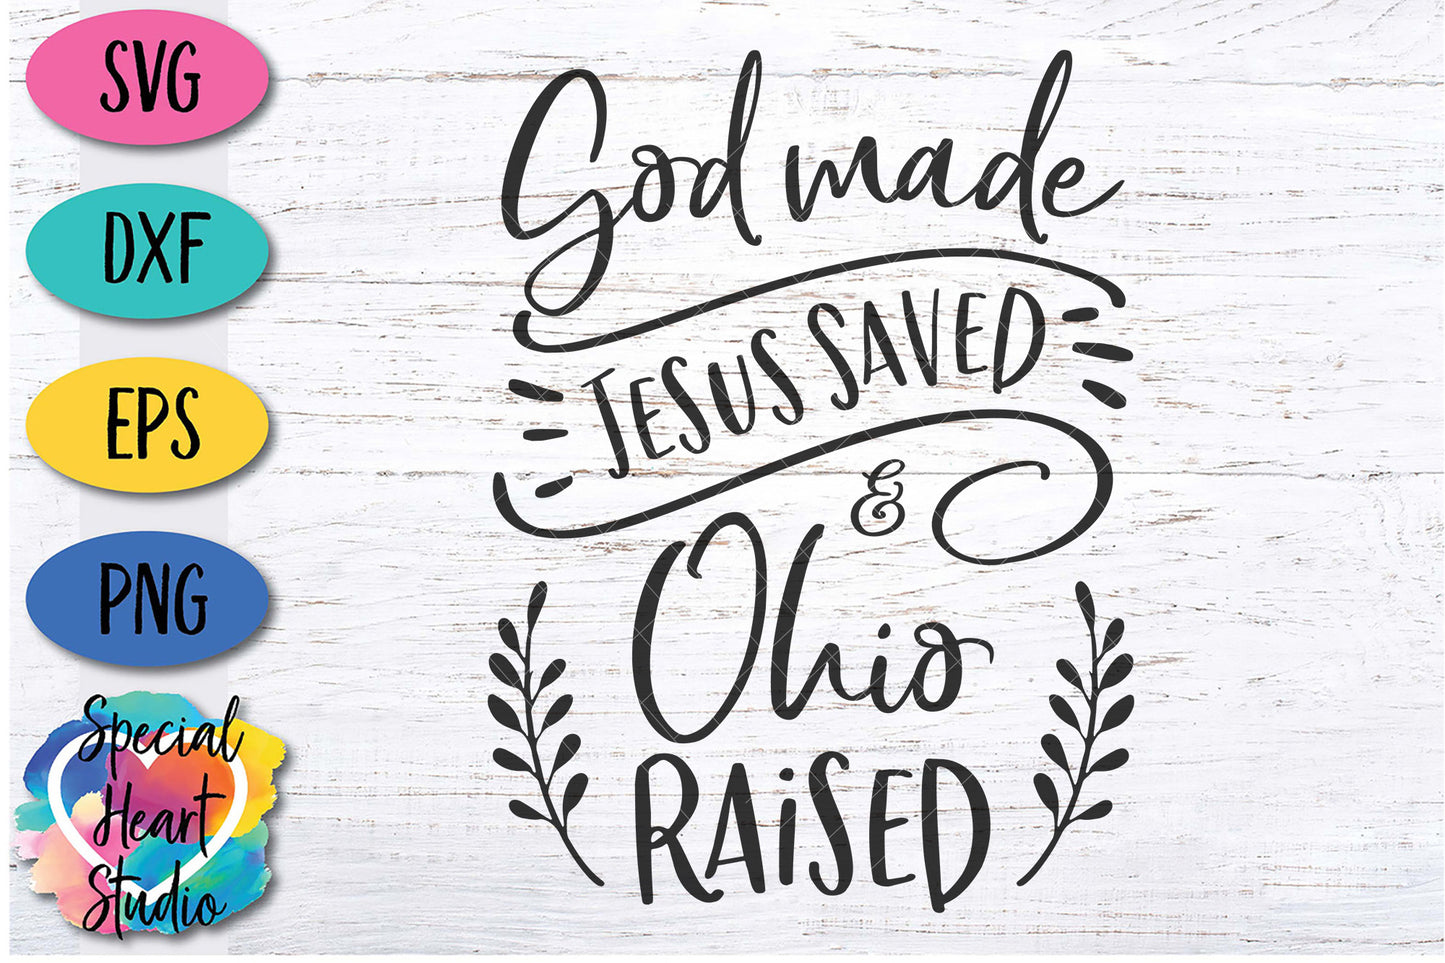 God Made, Jesus Saved and Ohio Raised